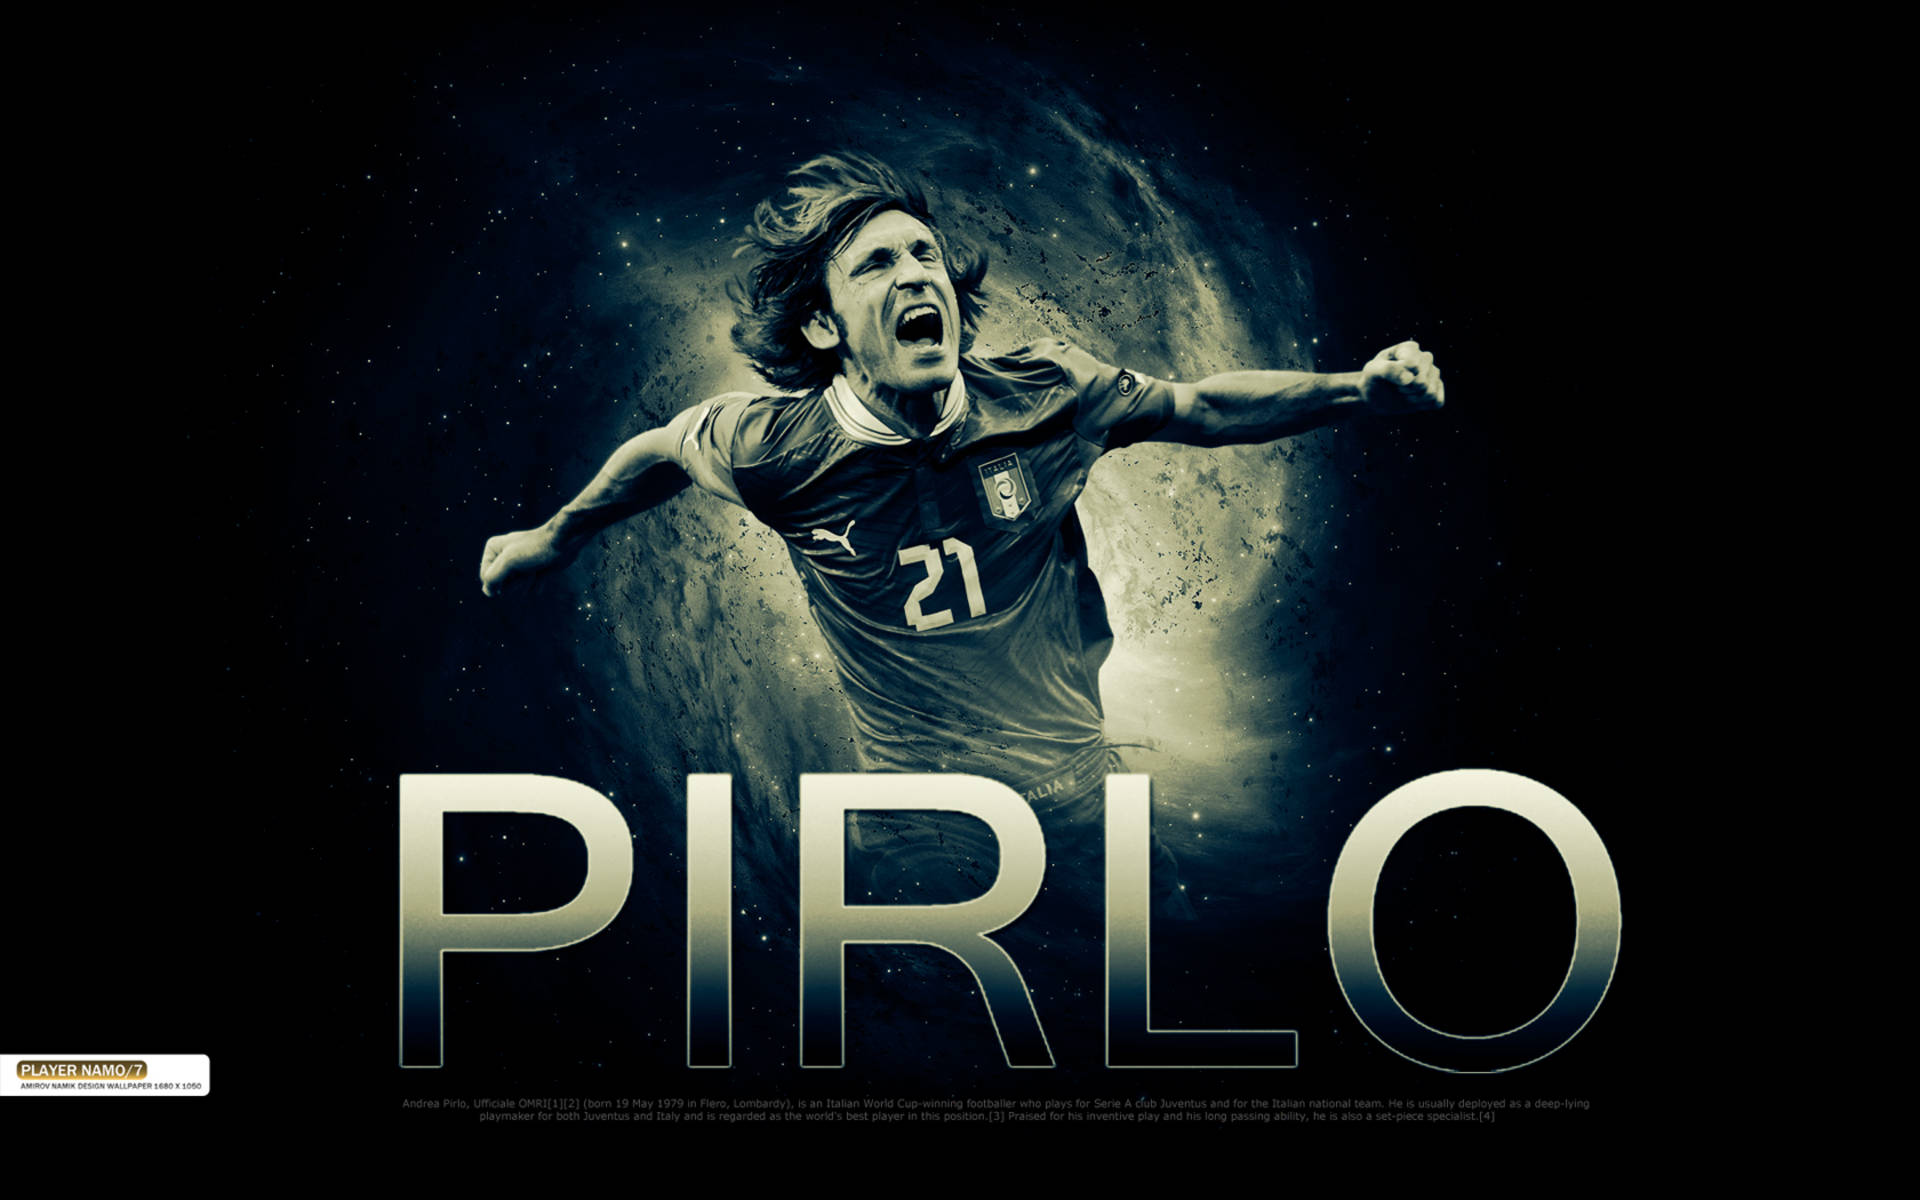 Andrea Pirlo - Galaxy Art Captivating Soccer Inspiration Wallpaper